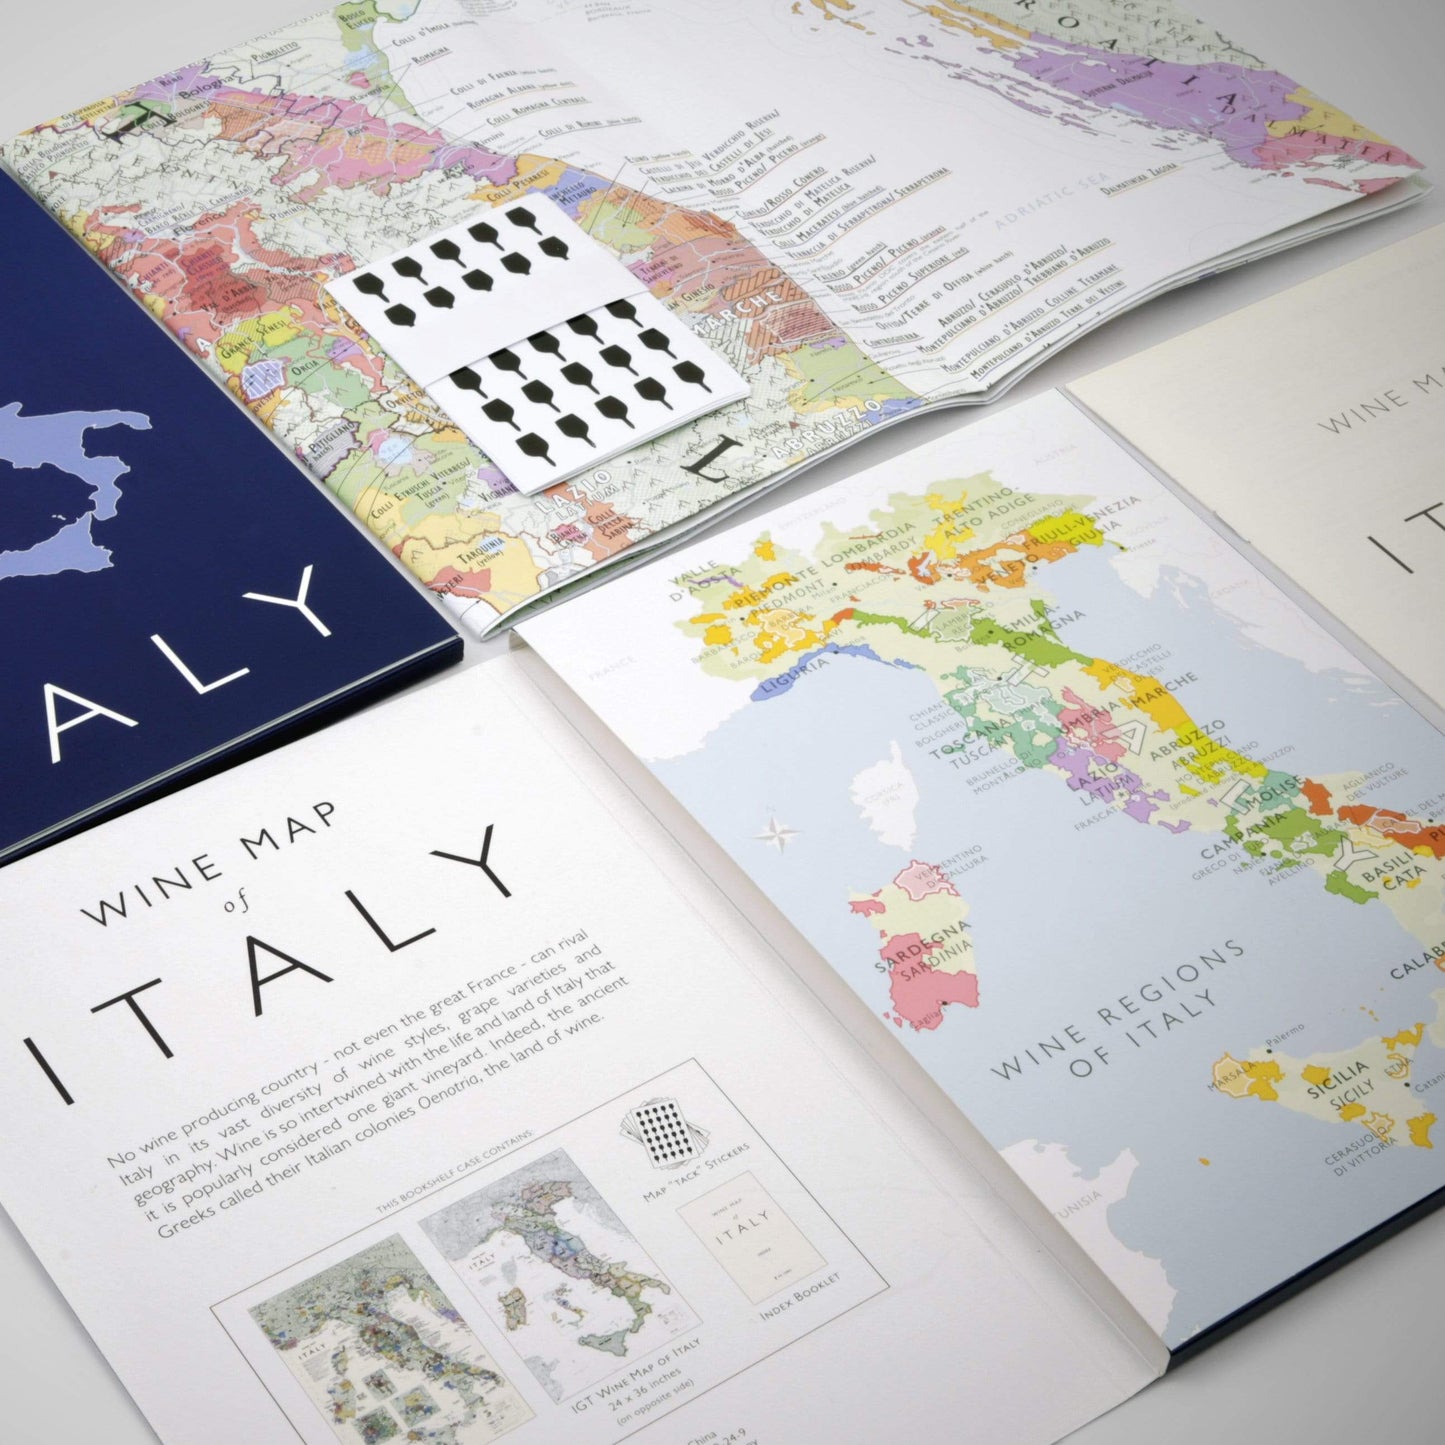 Wine Map of Italy - Bookshelf Edition open